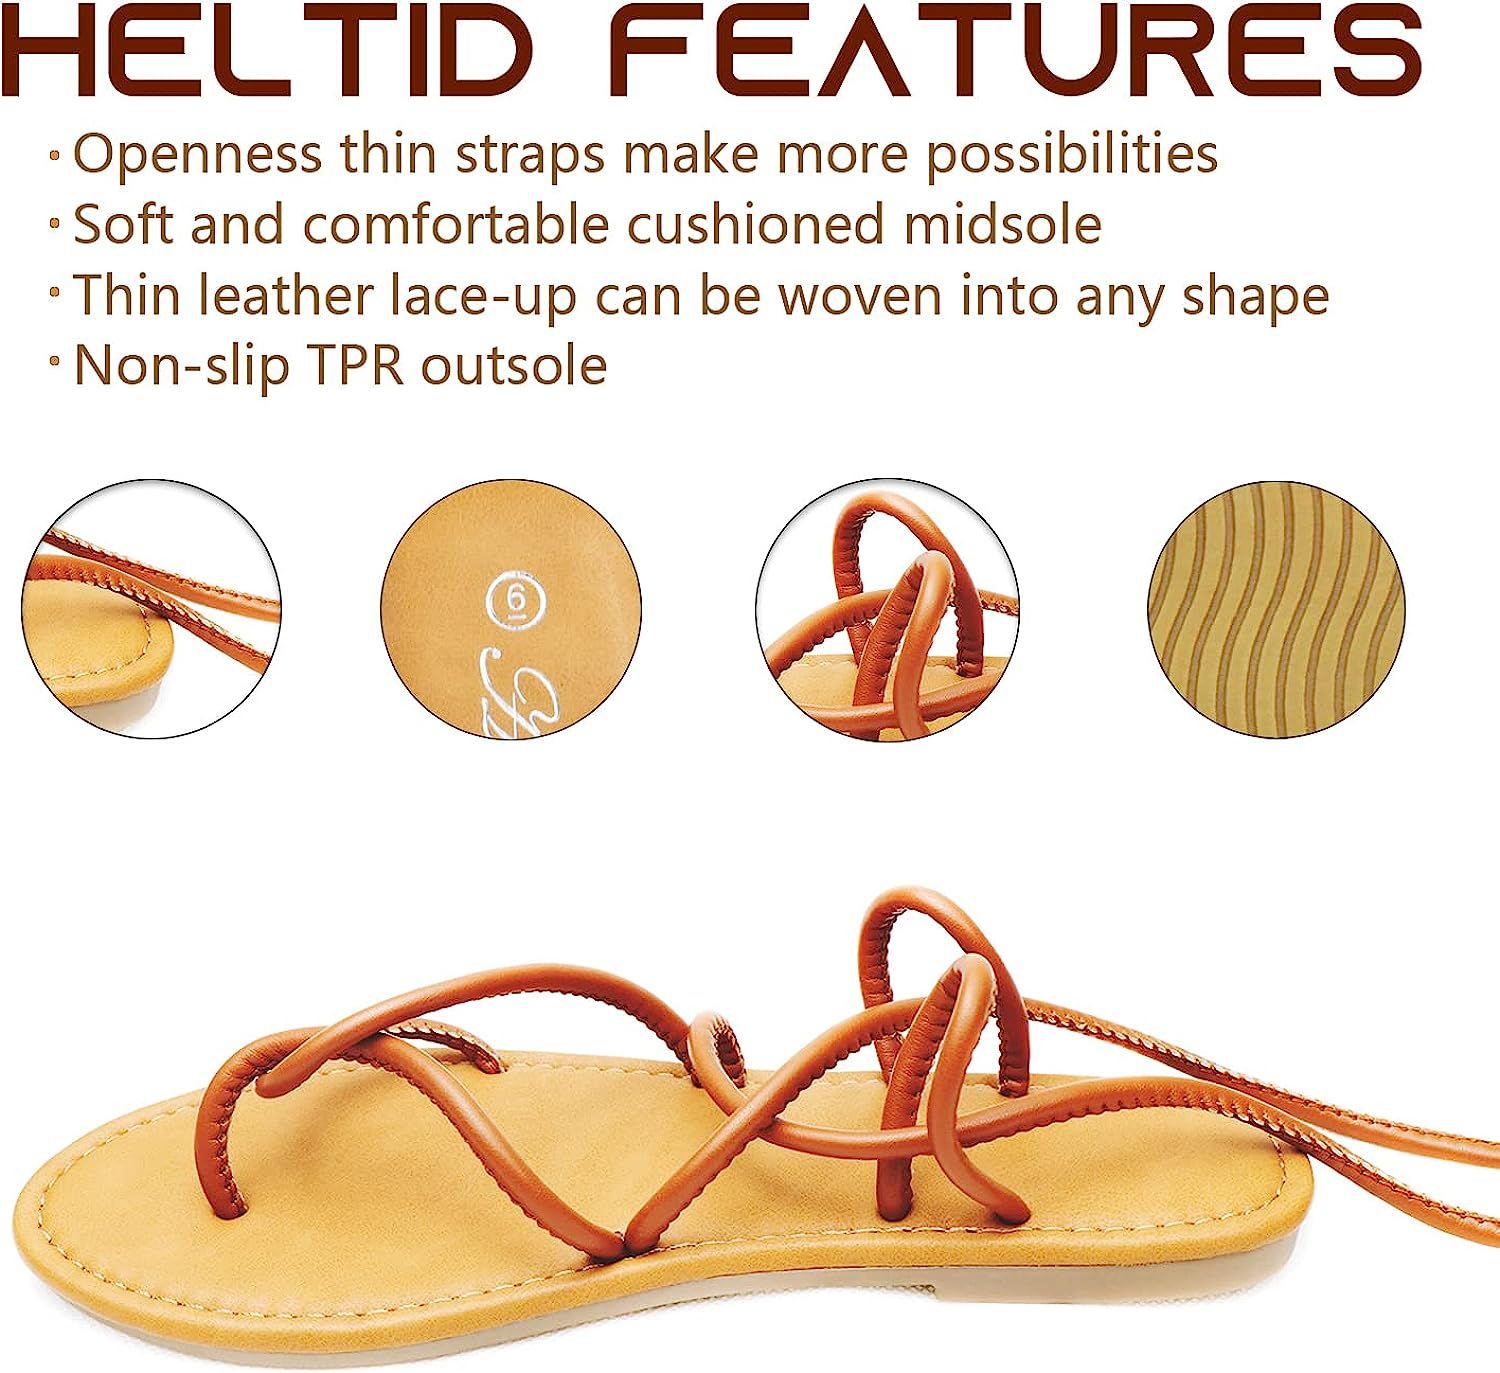 Heltid Women's Lace Up Gladiator flat Sandals Strappy Sandal for Women Dress Shoes | Amazon (US)